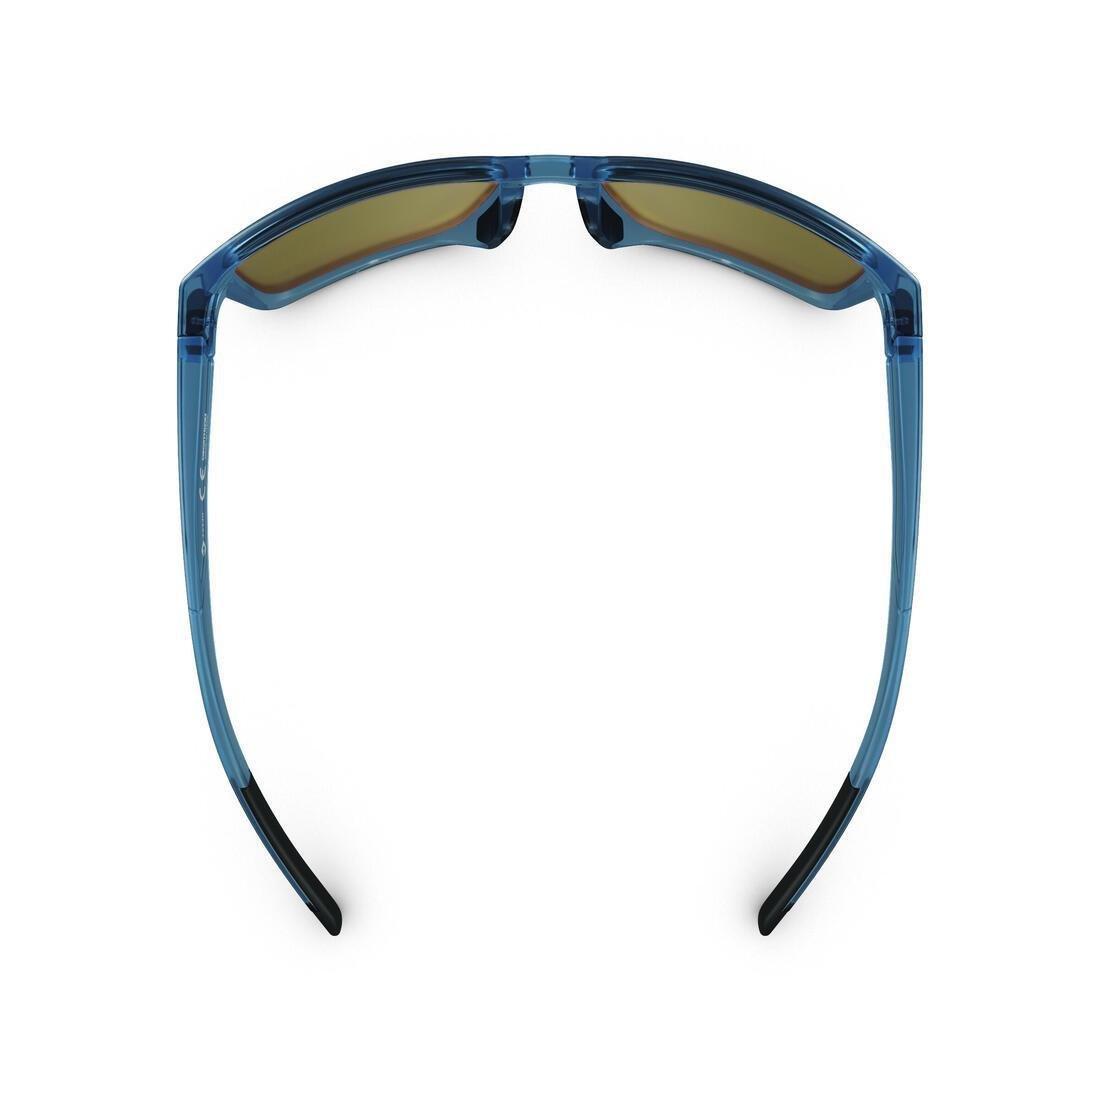 QUECHUA - Adults Category 3 Sunglasses, Black